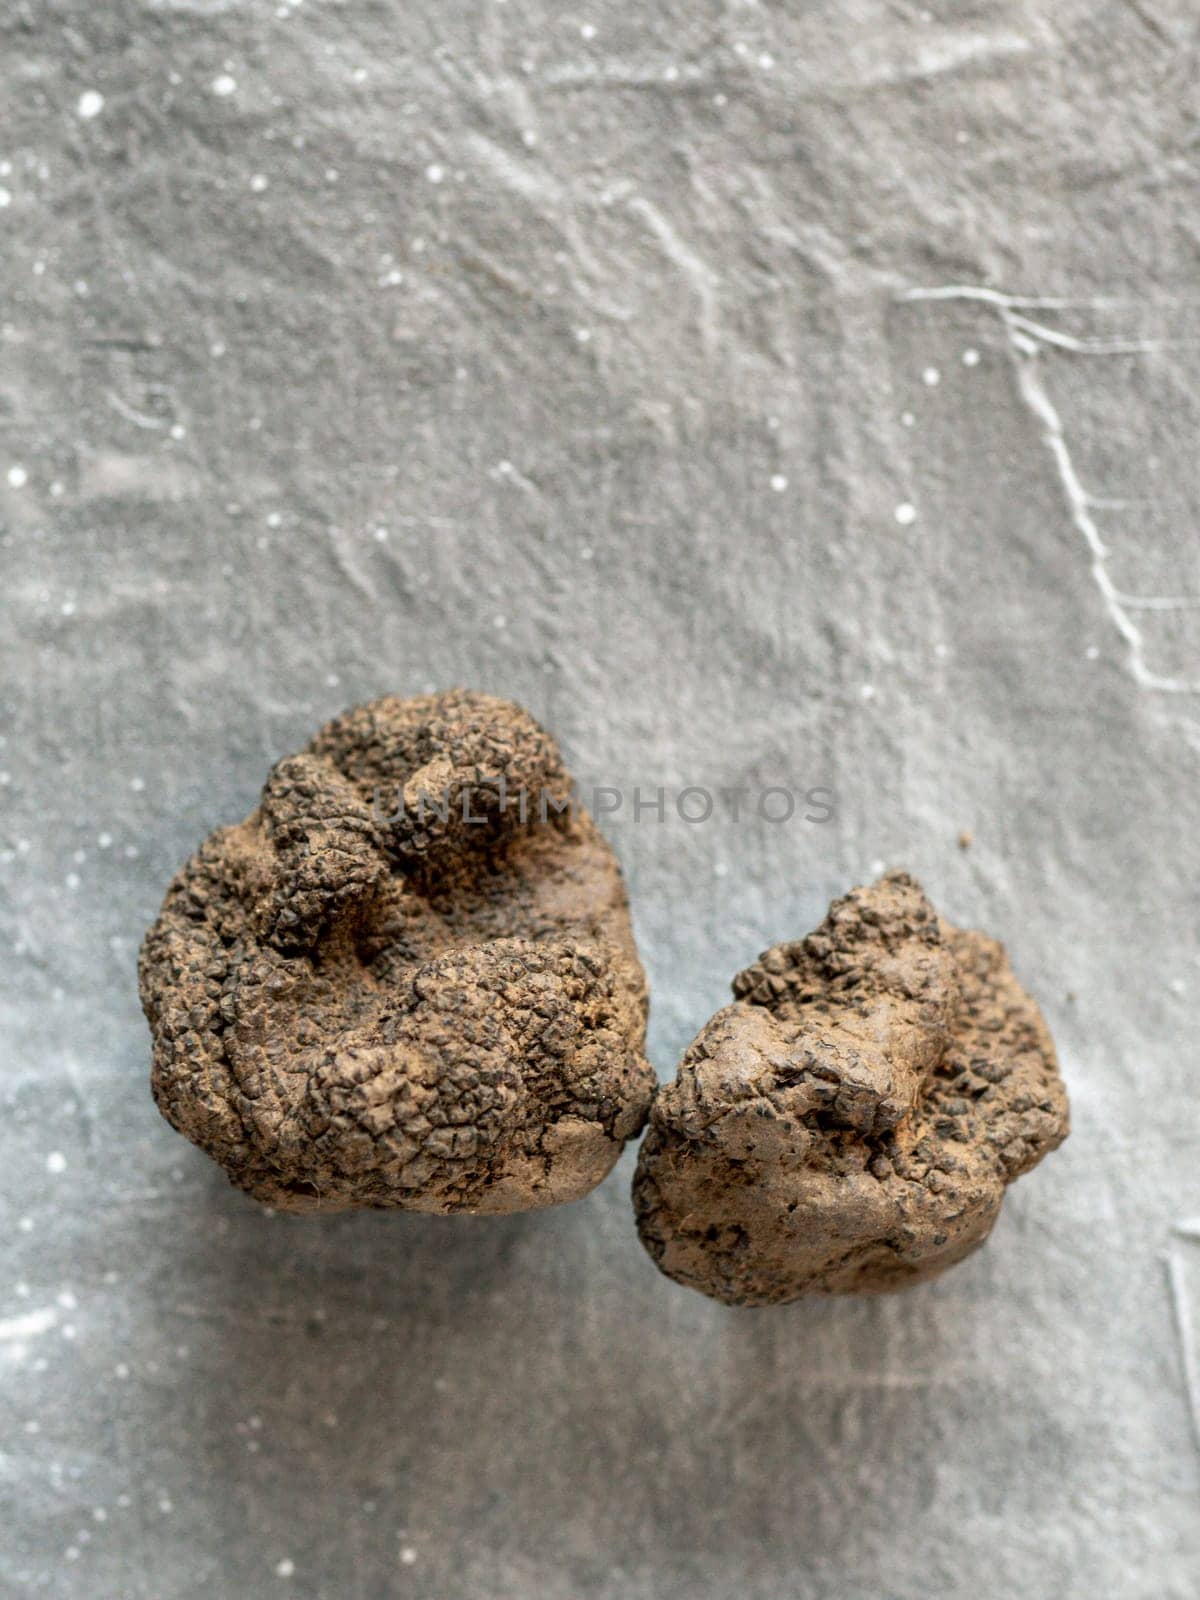 Black truffle mushroom on gray background by fascinadora